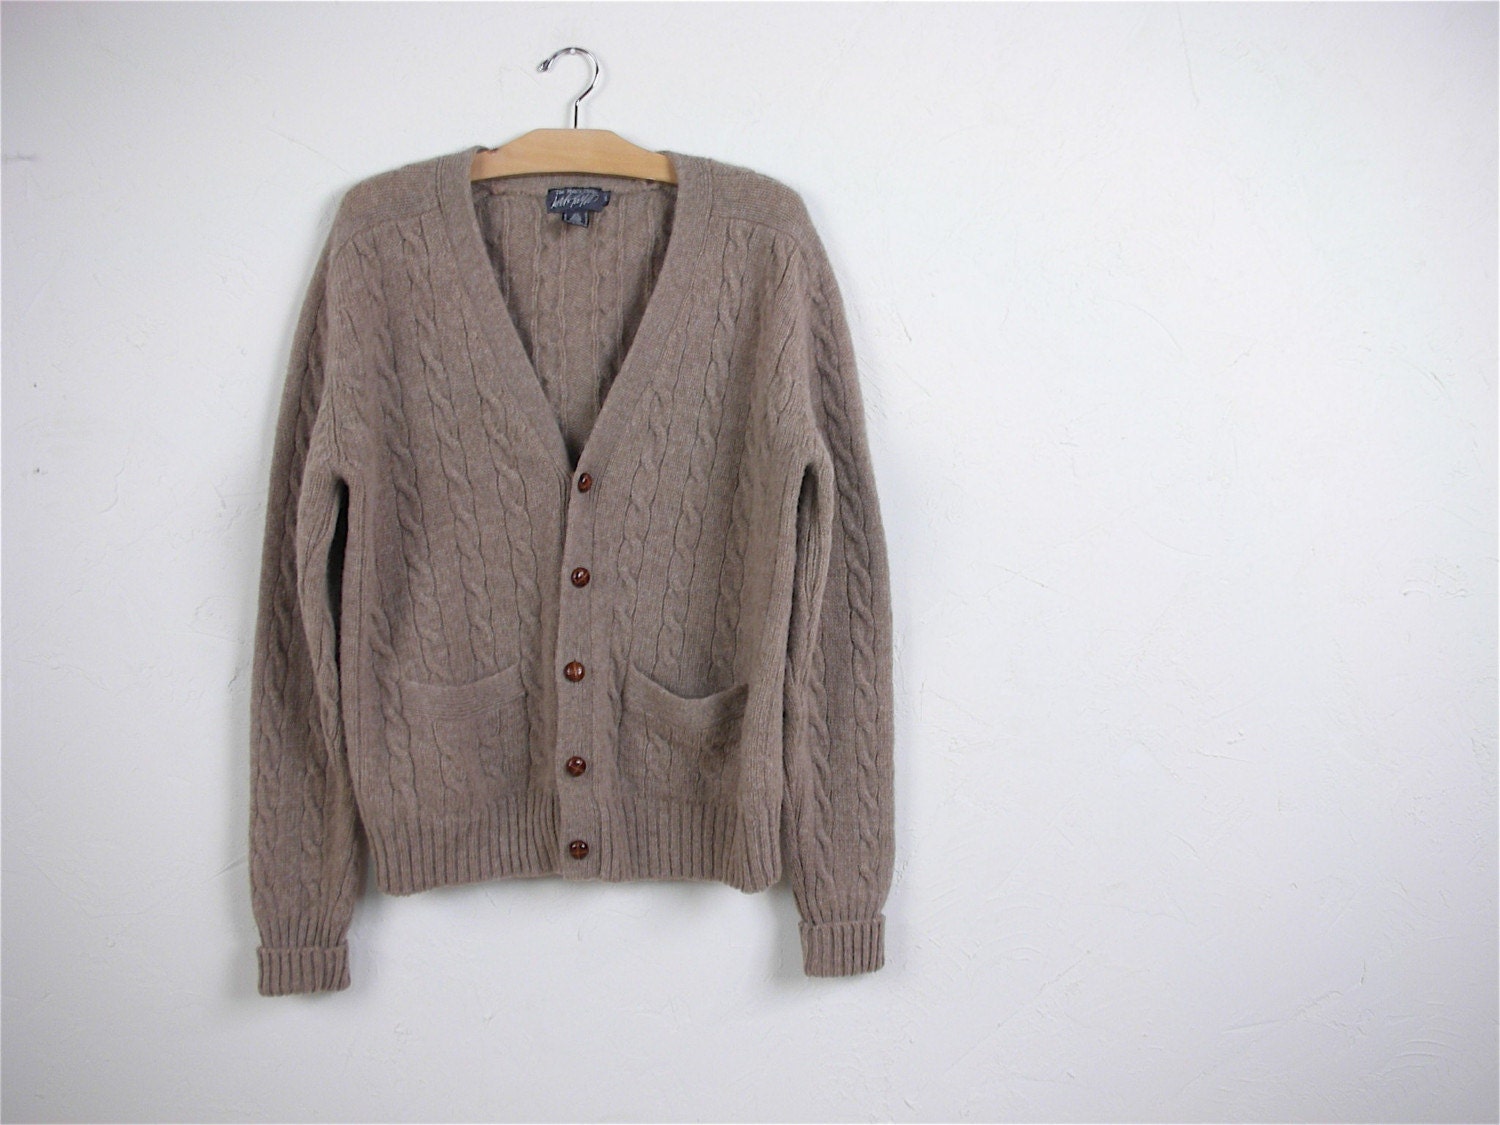 SALE...vintage Men's Light Brown Cardigan Sweater . Size